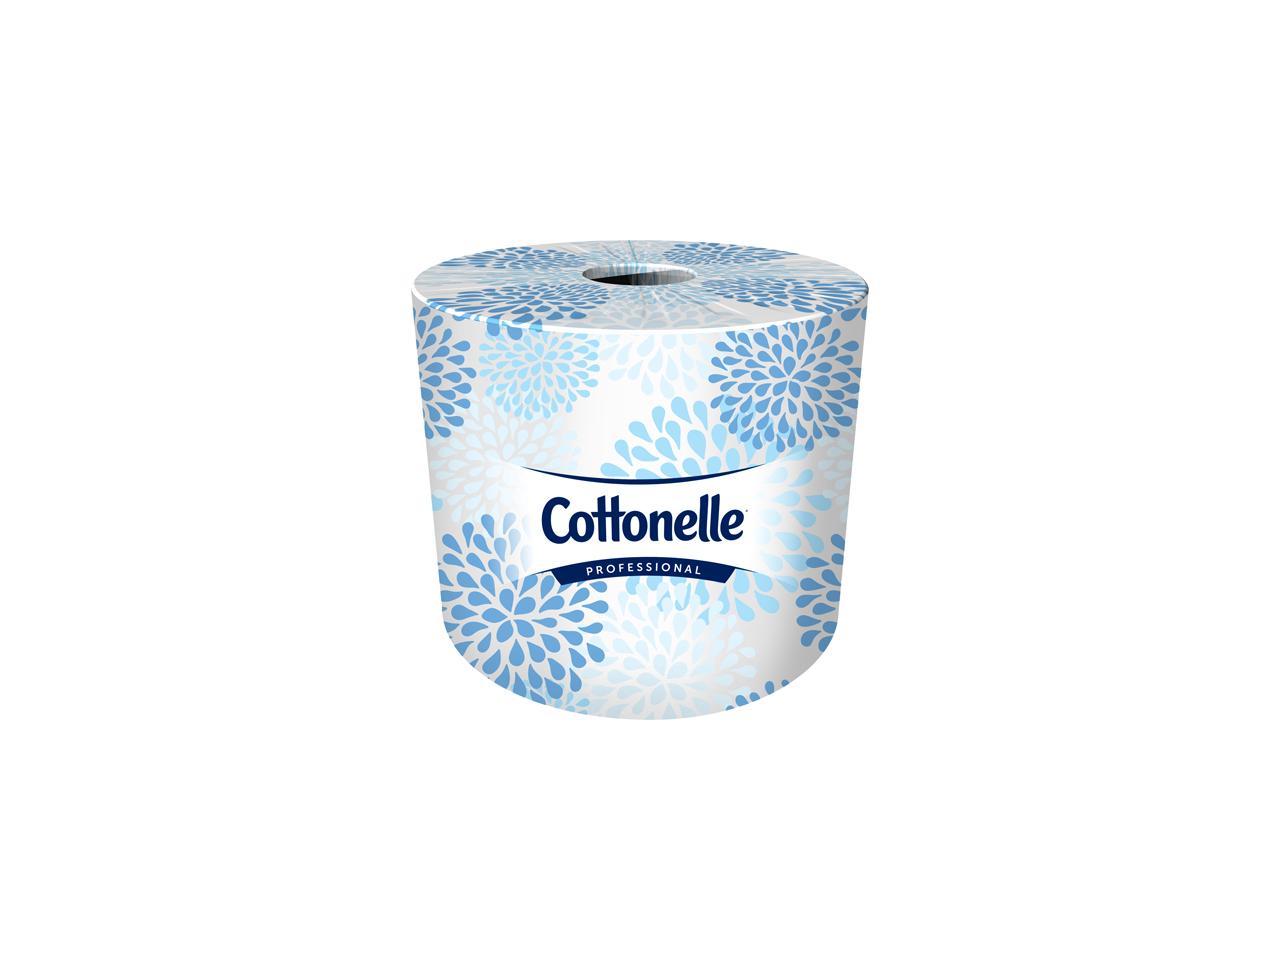 Cottonelle Professional Standard Roll Bathroom Tissue - Newegg.com